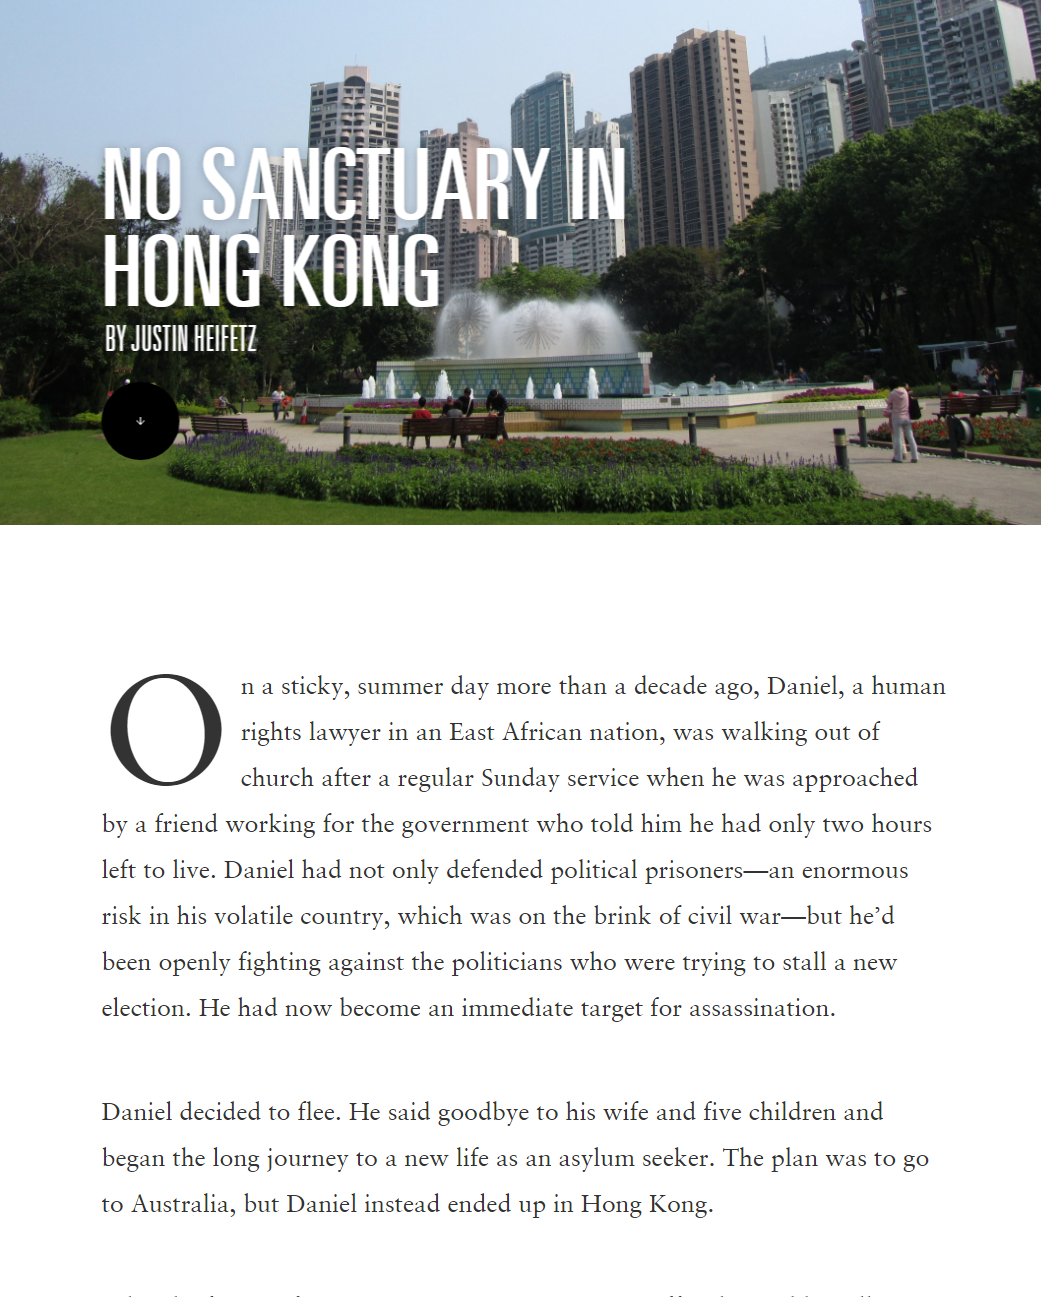 No sanctuary in Hong Kong